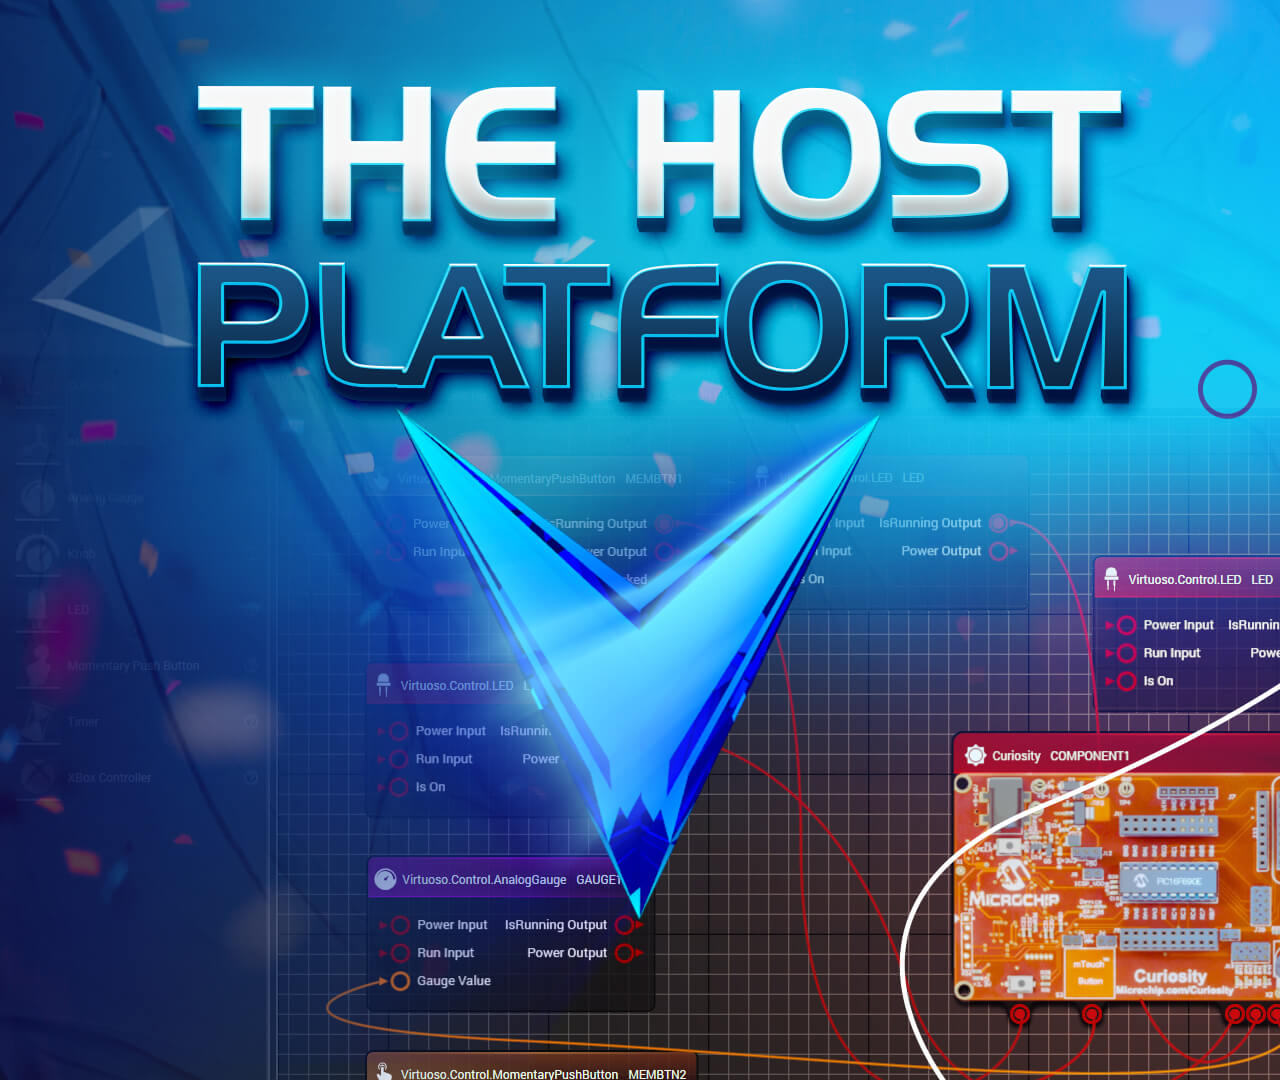 The Host Platform